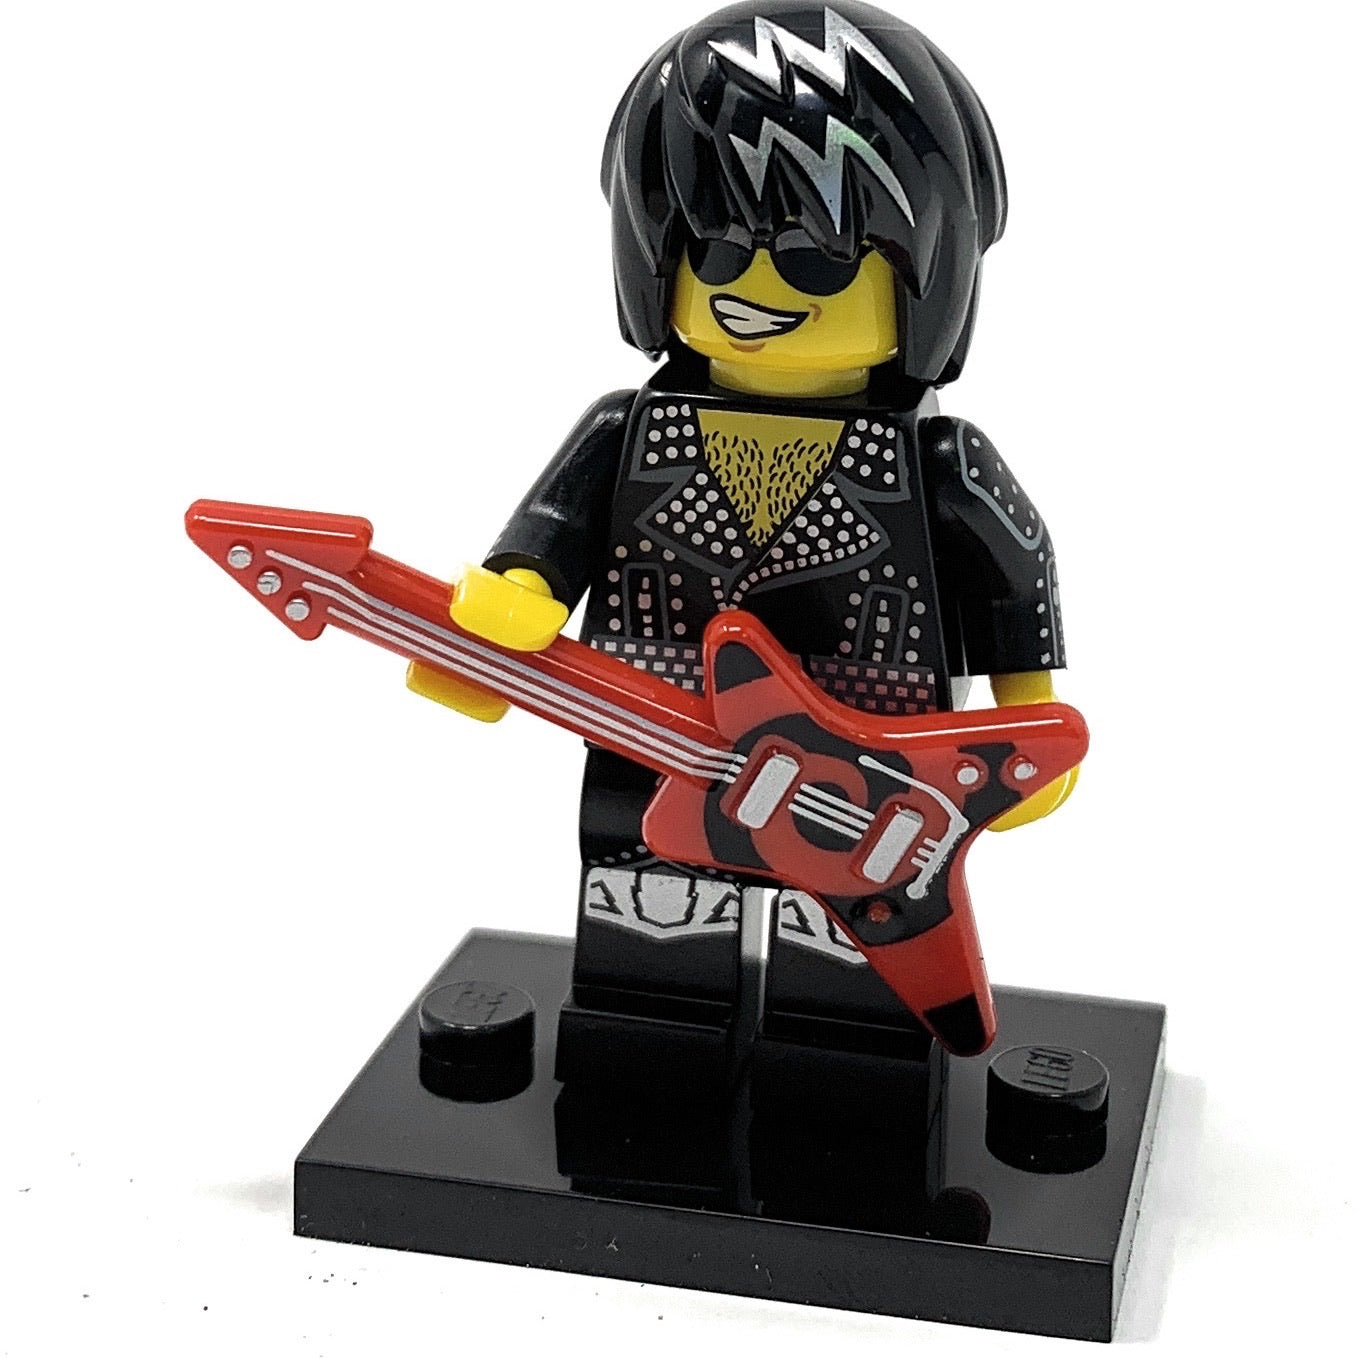 Rock Star - LEGO Series 12 Collectible Minifigure (2014)